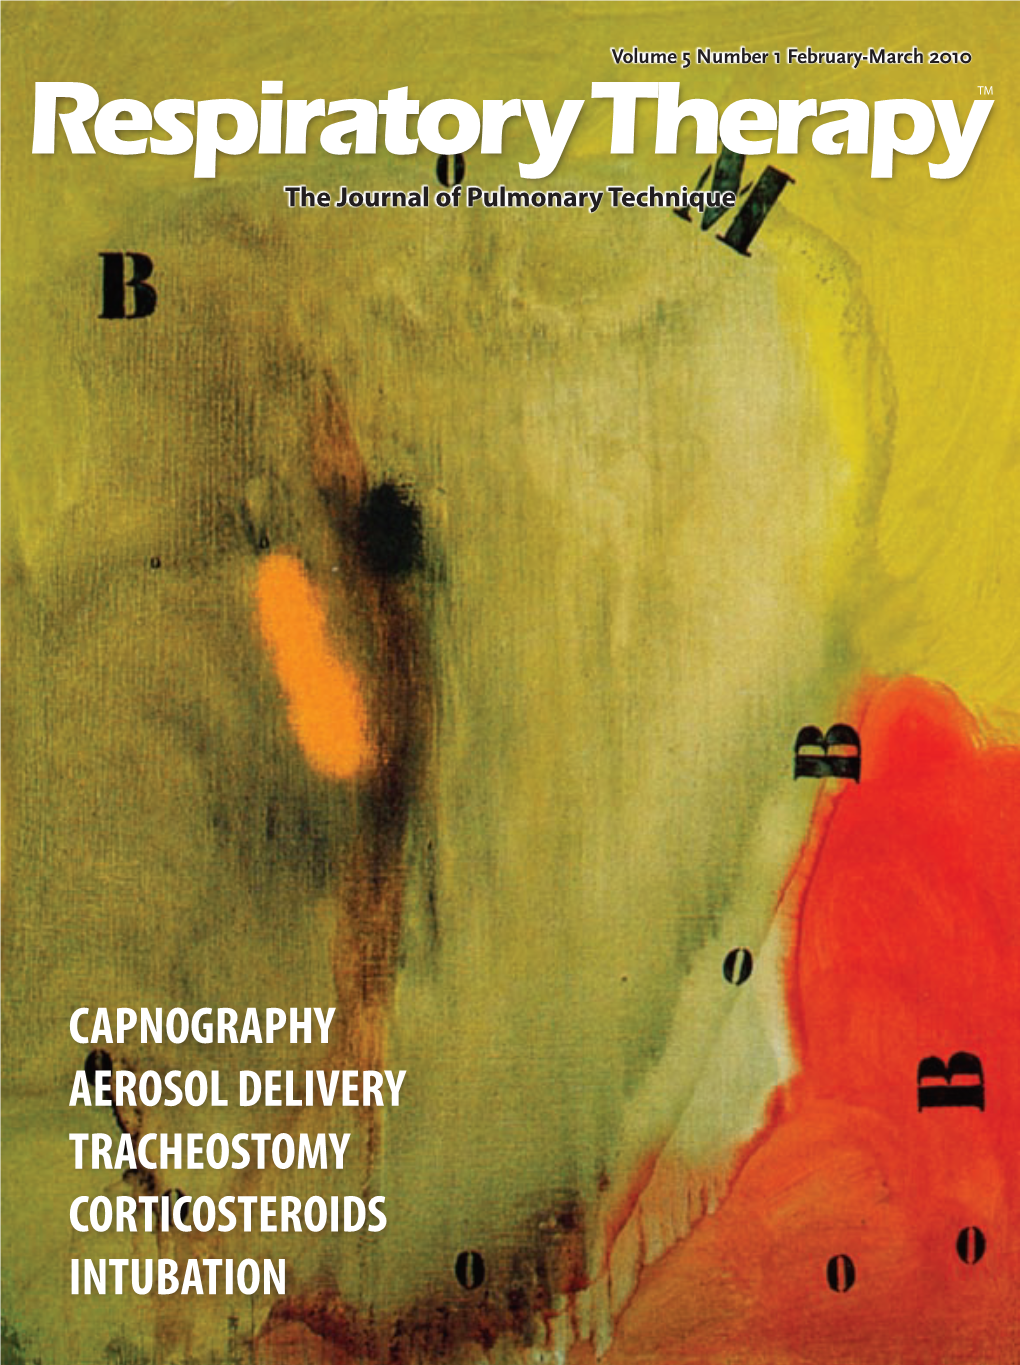 Capnography Aerosol Delivery Tracheostomy Corticosteroids Intubation Wright DJ10 1 9/21/09 3:58:04 PM